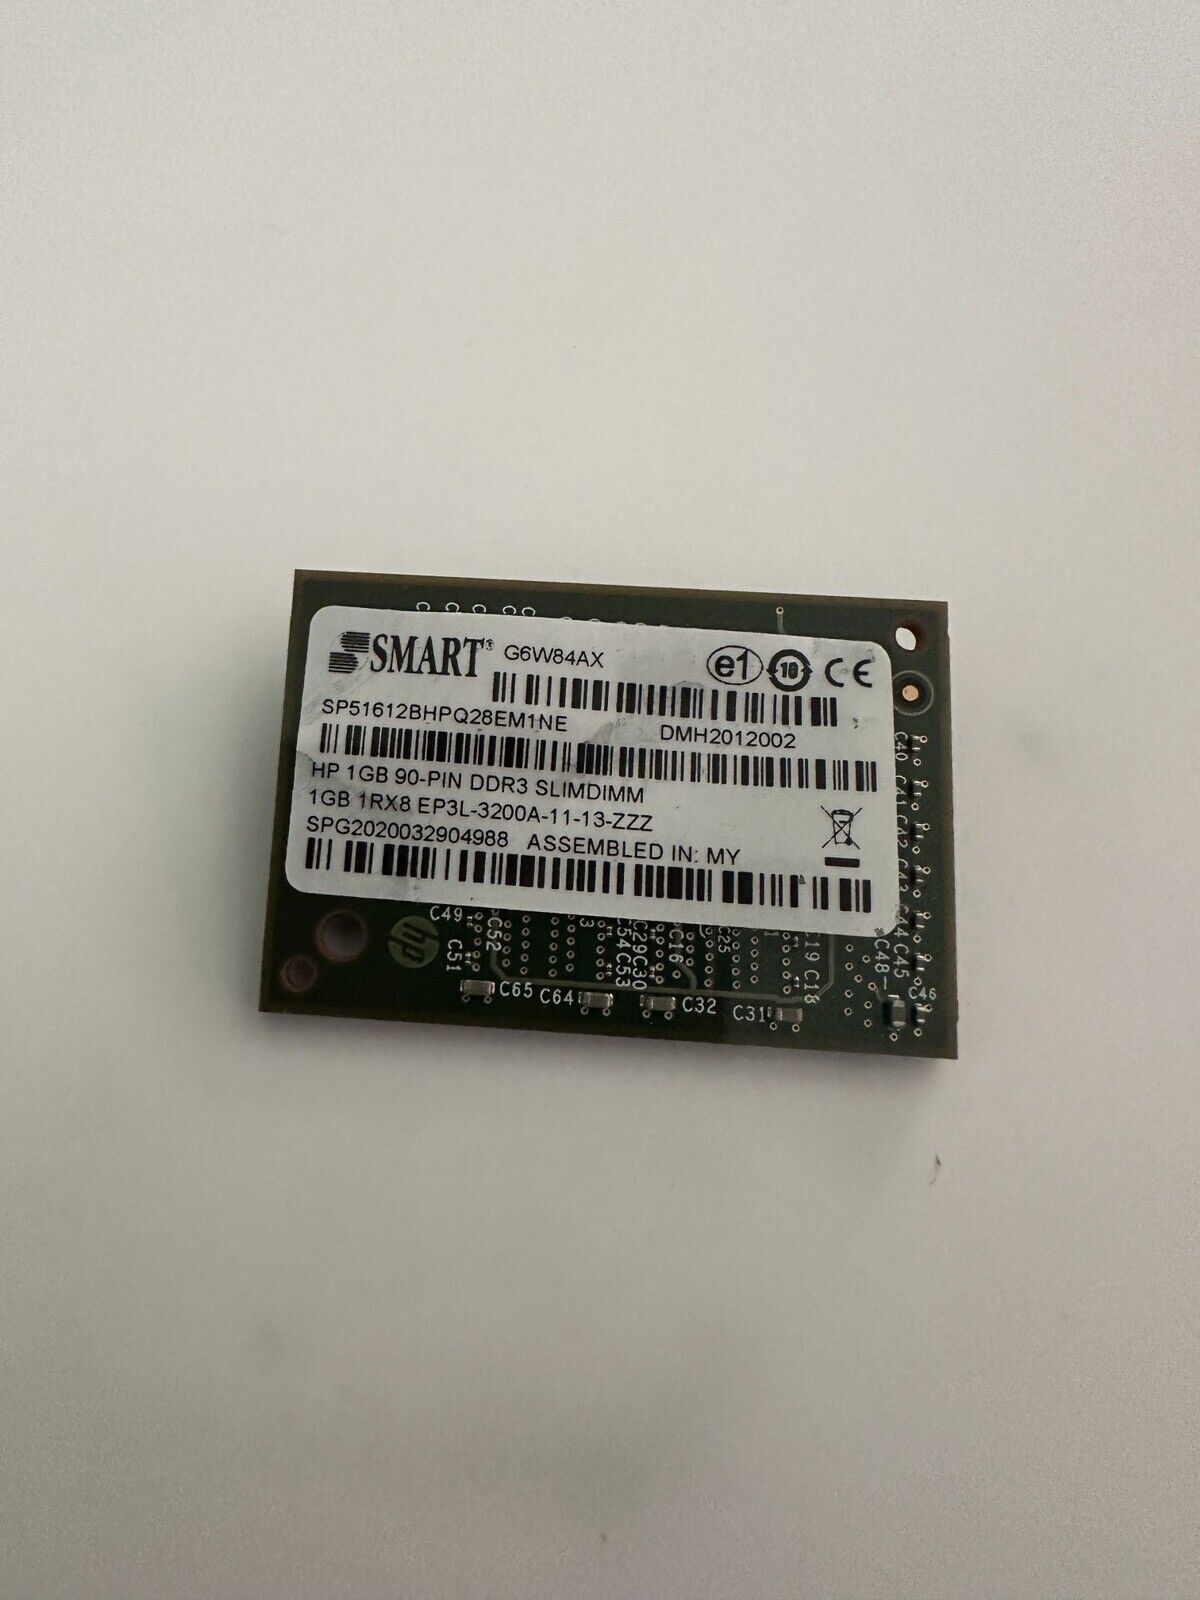 G6W84A Genuine HP  1 GB 90-pin DDR3 DIMM-Dual in-line Memory